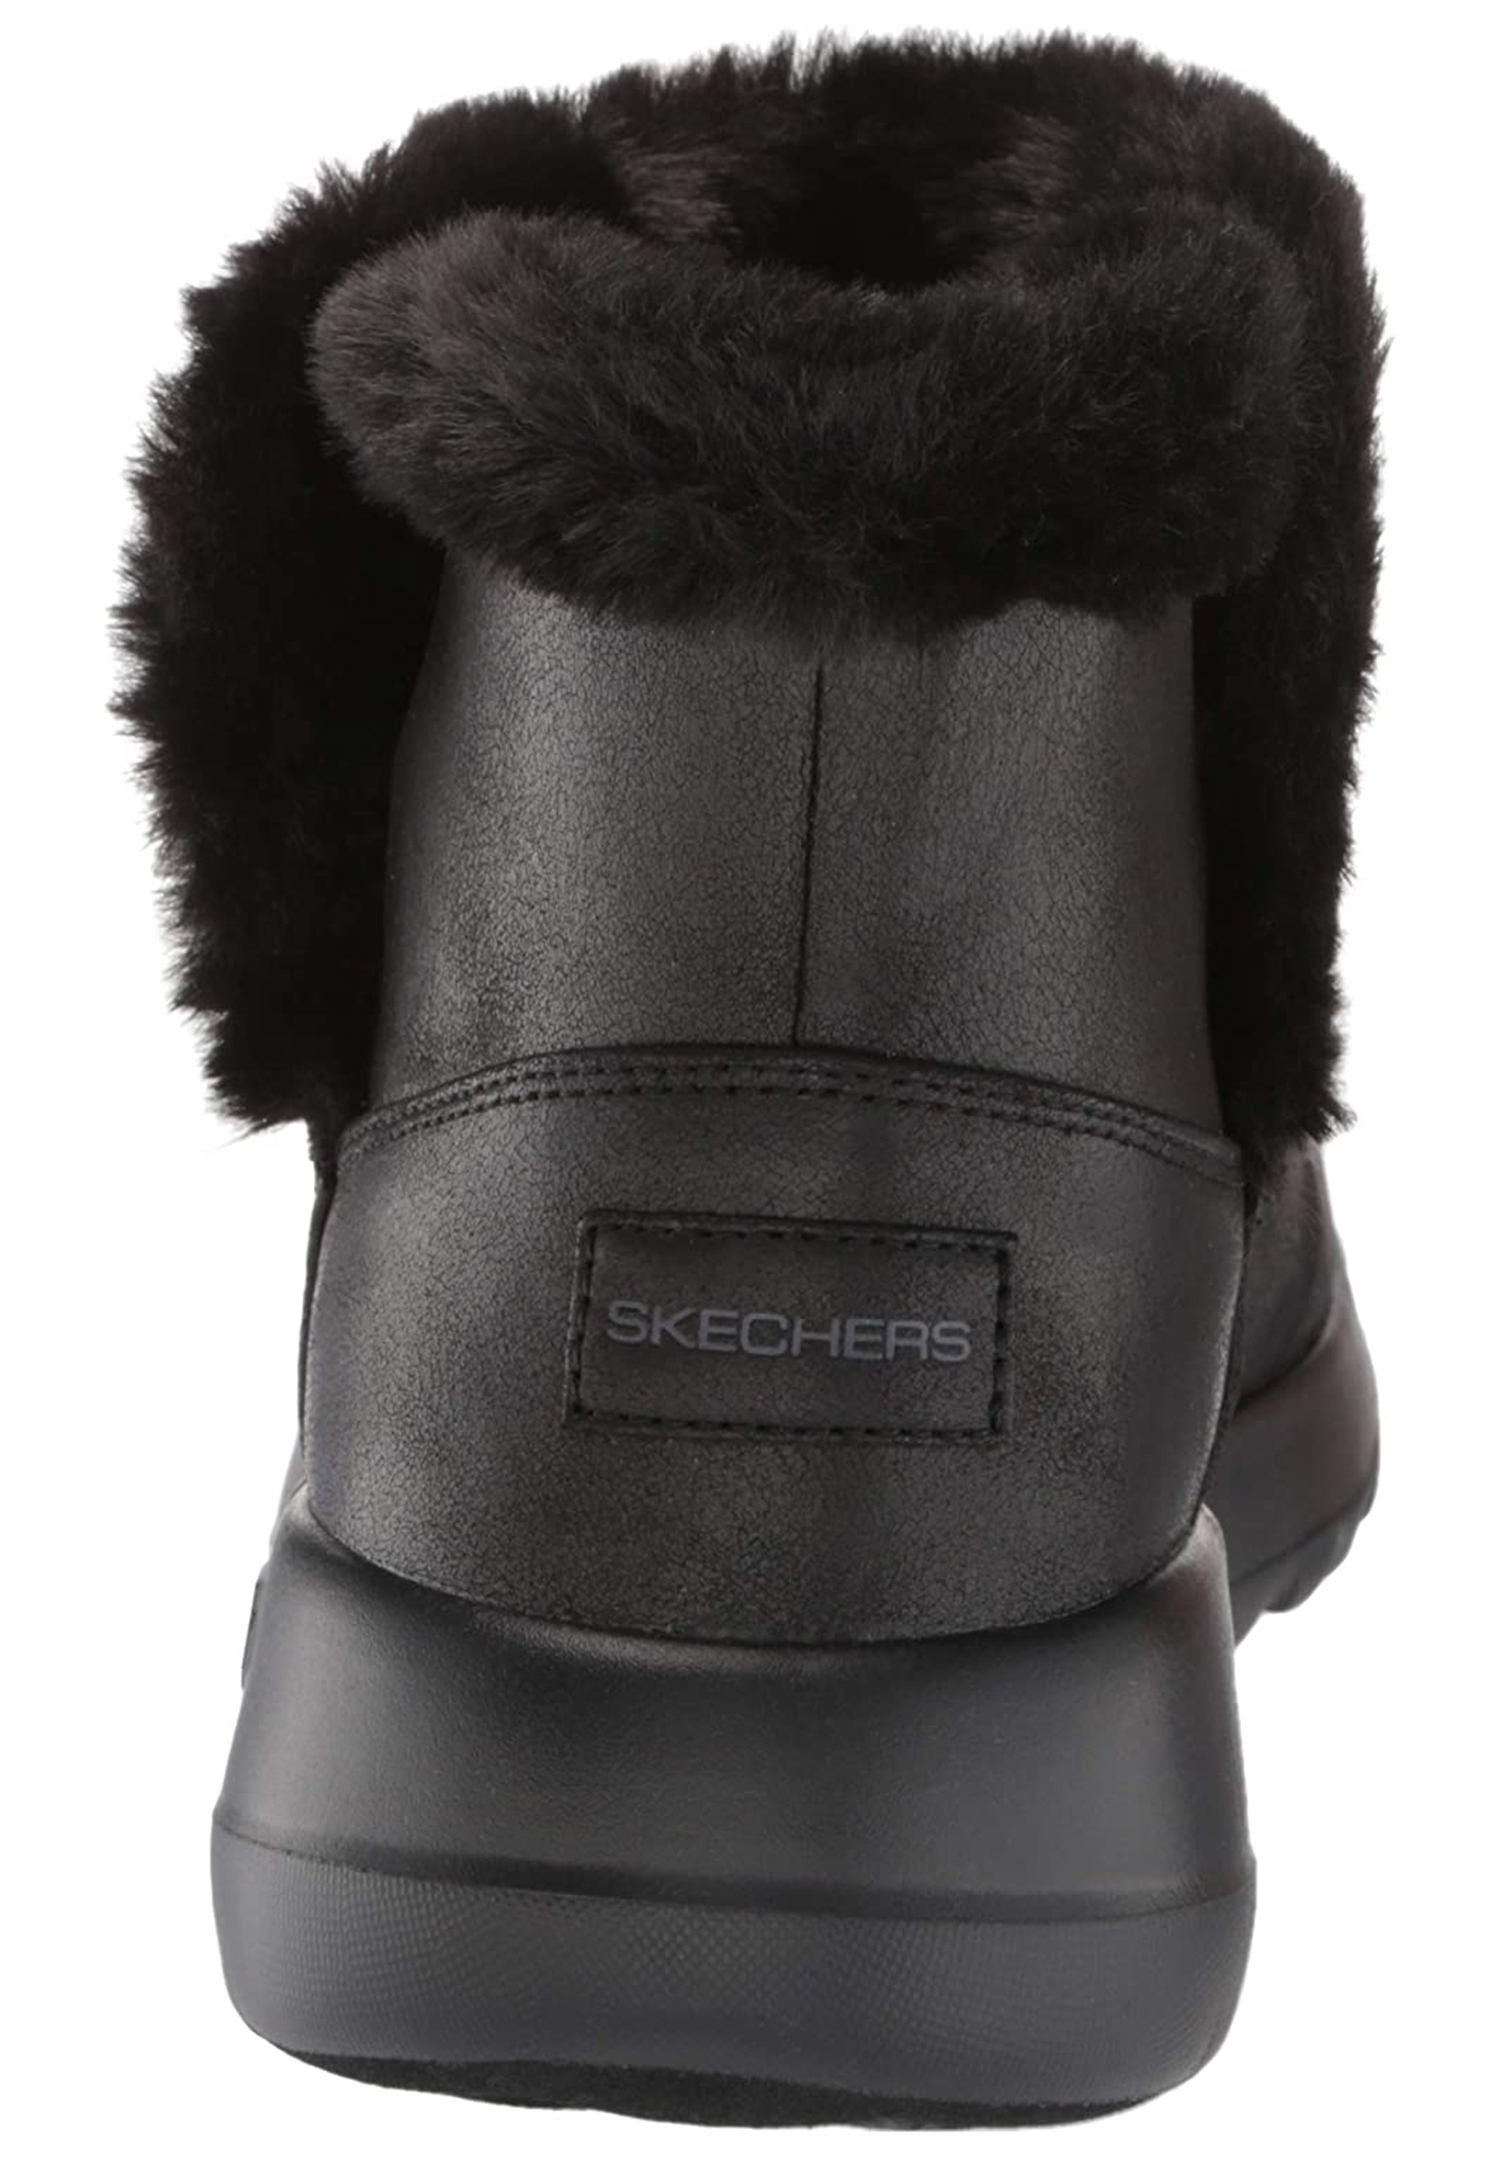 Skechers O-T-G Womens Boots ON-THE-GO JOY ENDEAVOR Stiefel Damen 144013 BBK schwarz